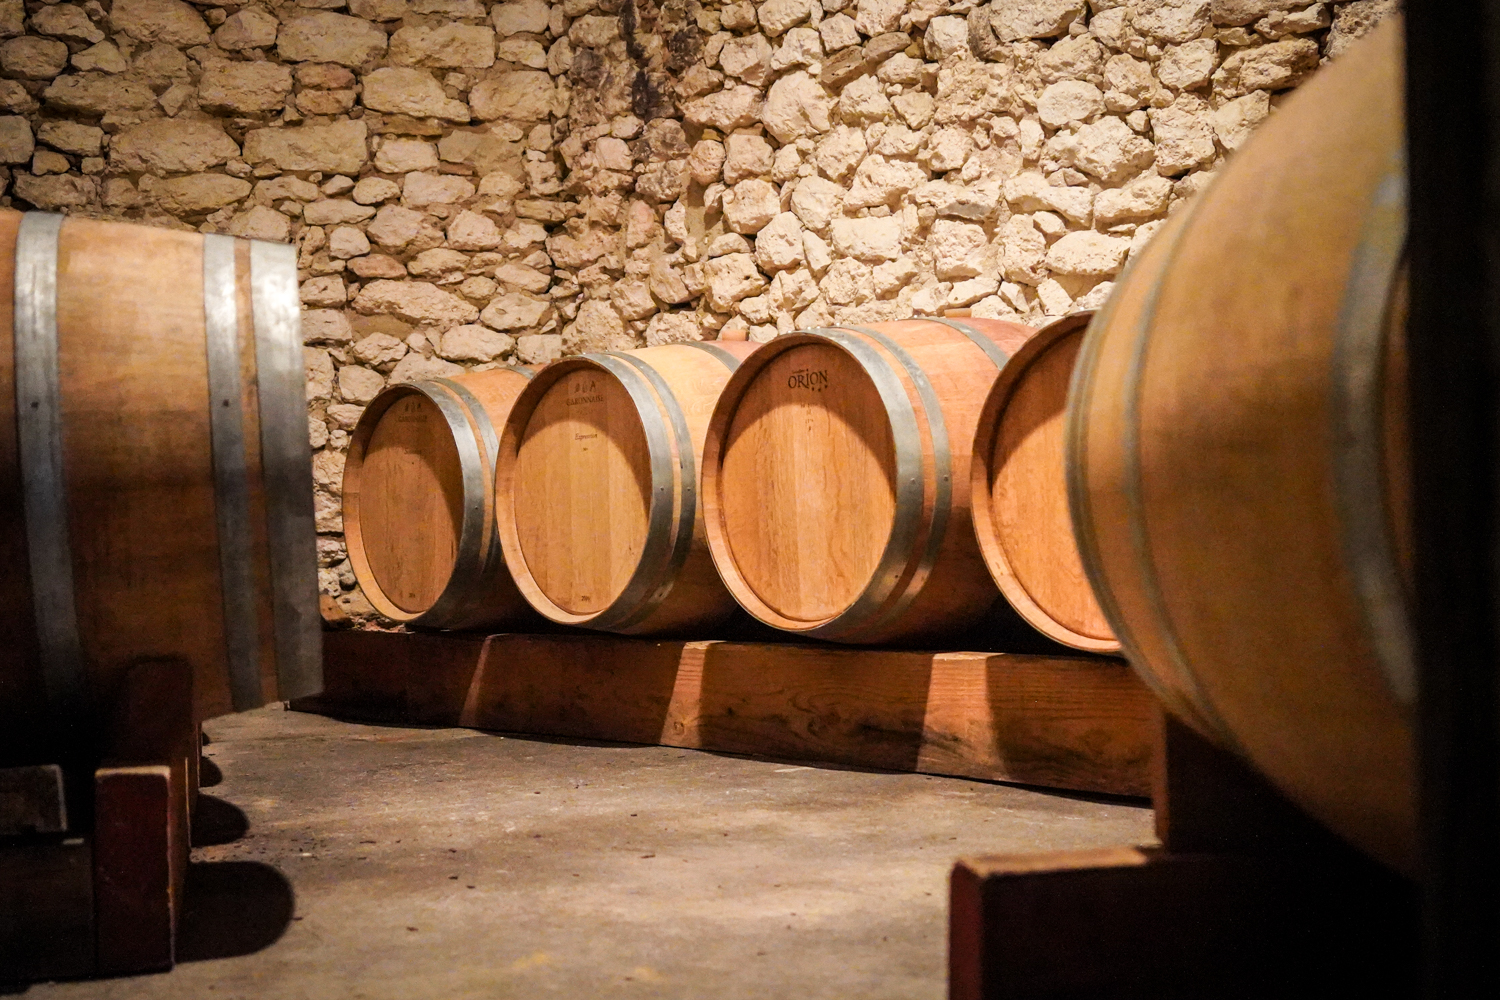 The wines cellar